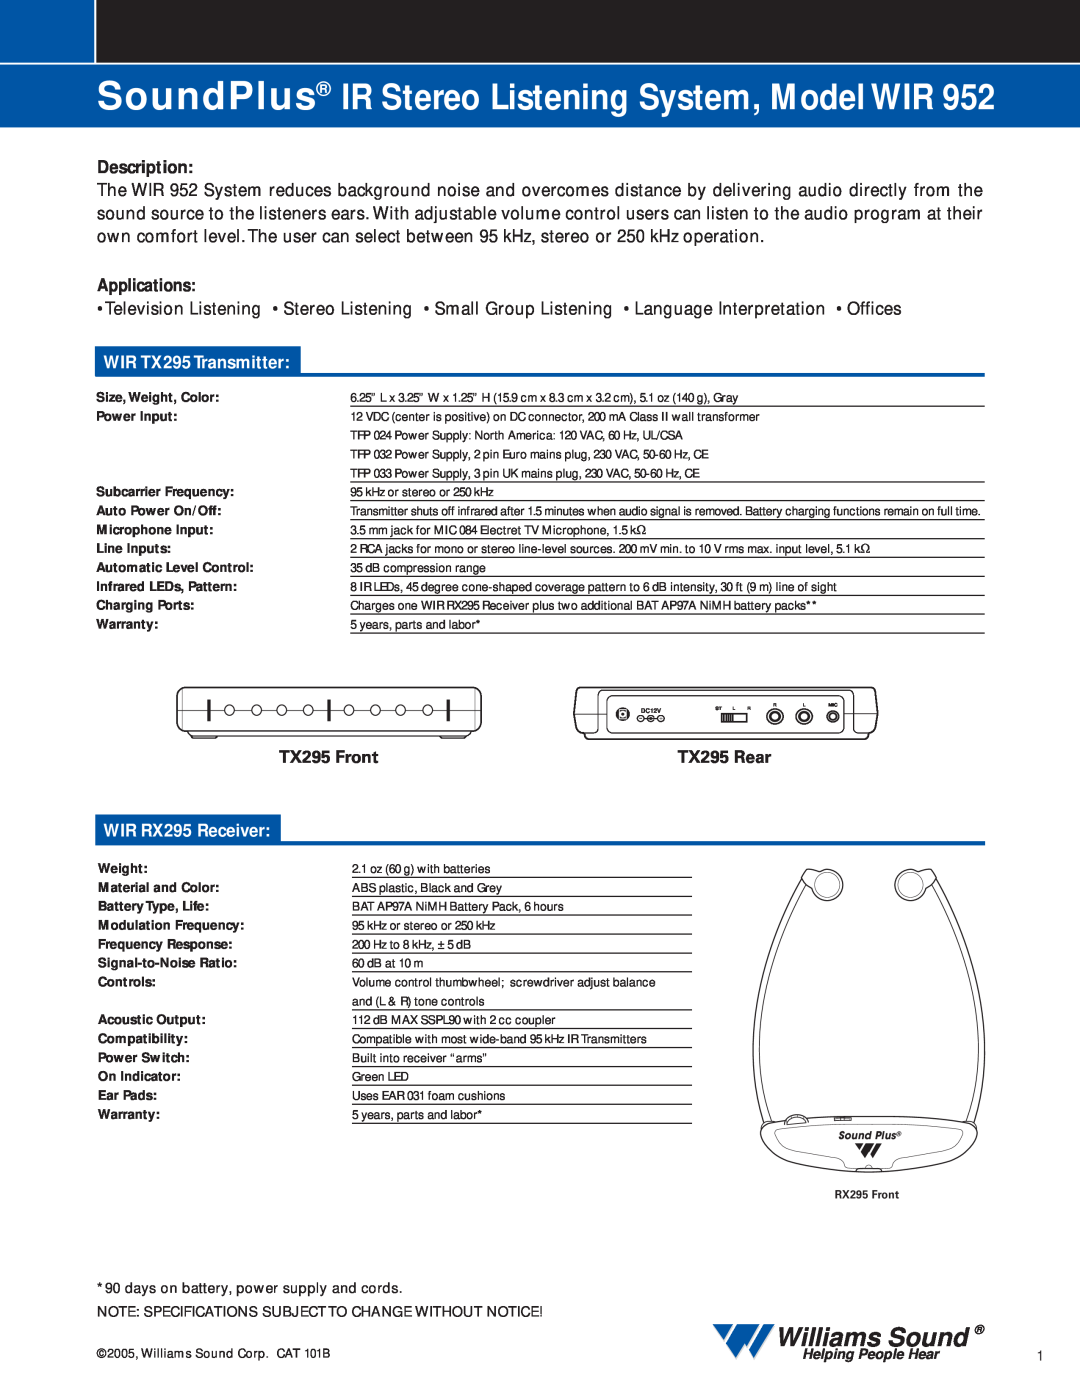 Williams Sound WIR 952 specifications SoundPlus IR Stereo Listening System, Model WIR, Williams Sound, Description 